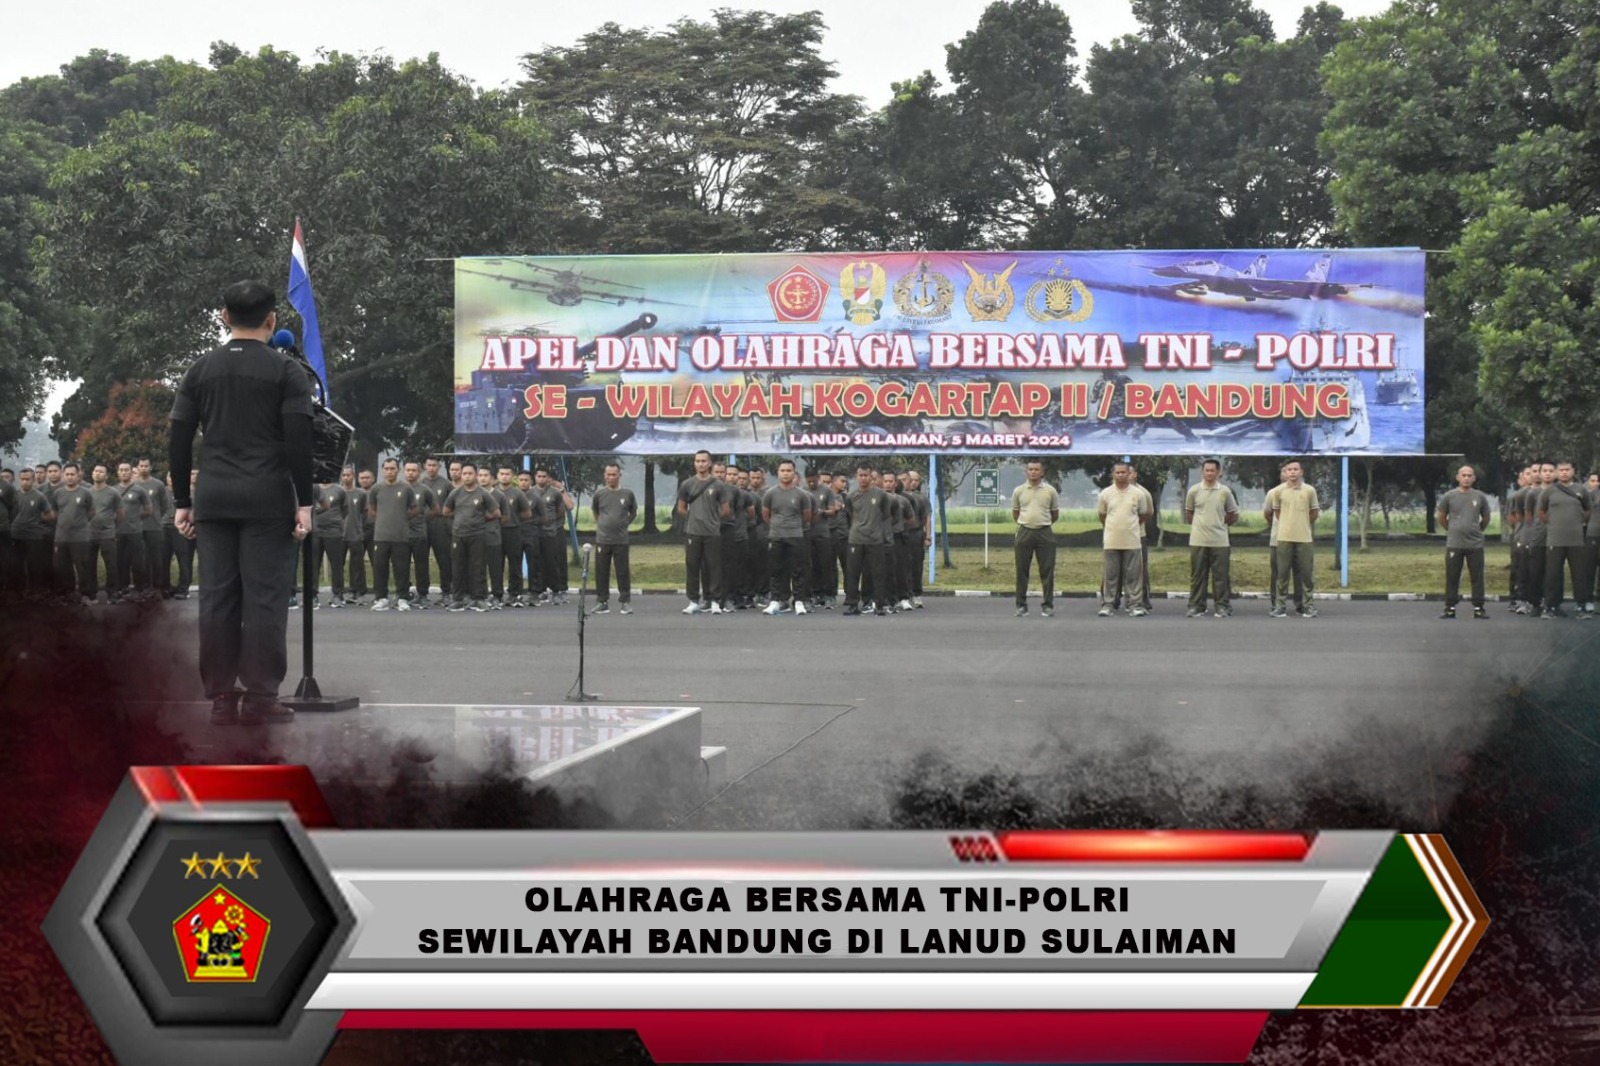 OLAHRAGA BERSAMA TNI-POLRI SEWILAYAH BANDUNG DI LANUD SULAIMAN